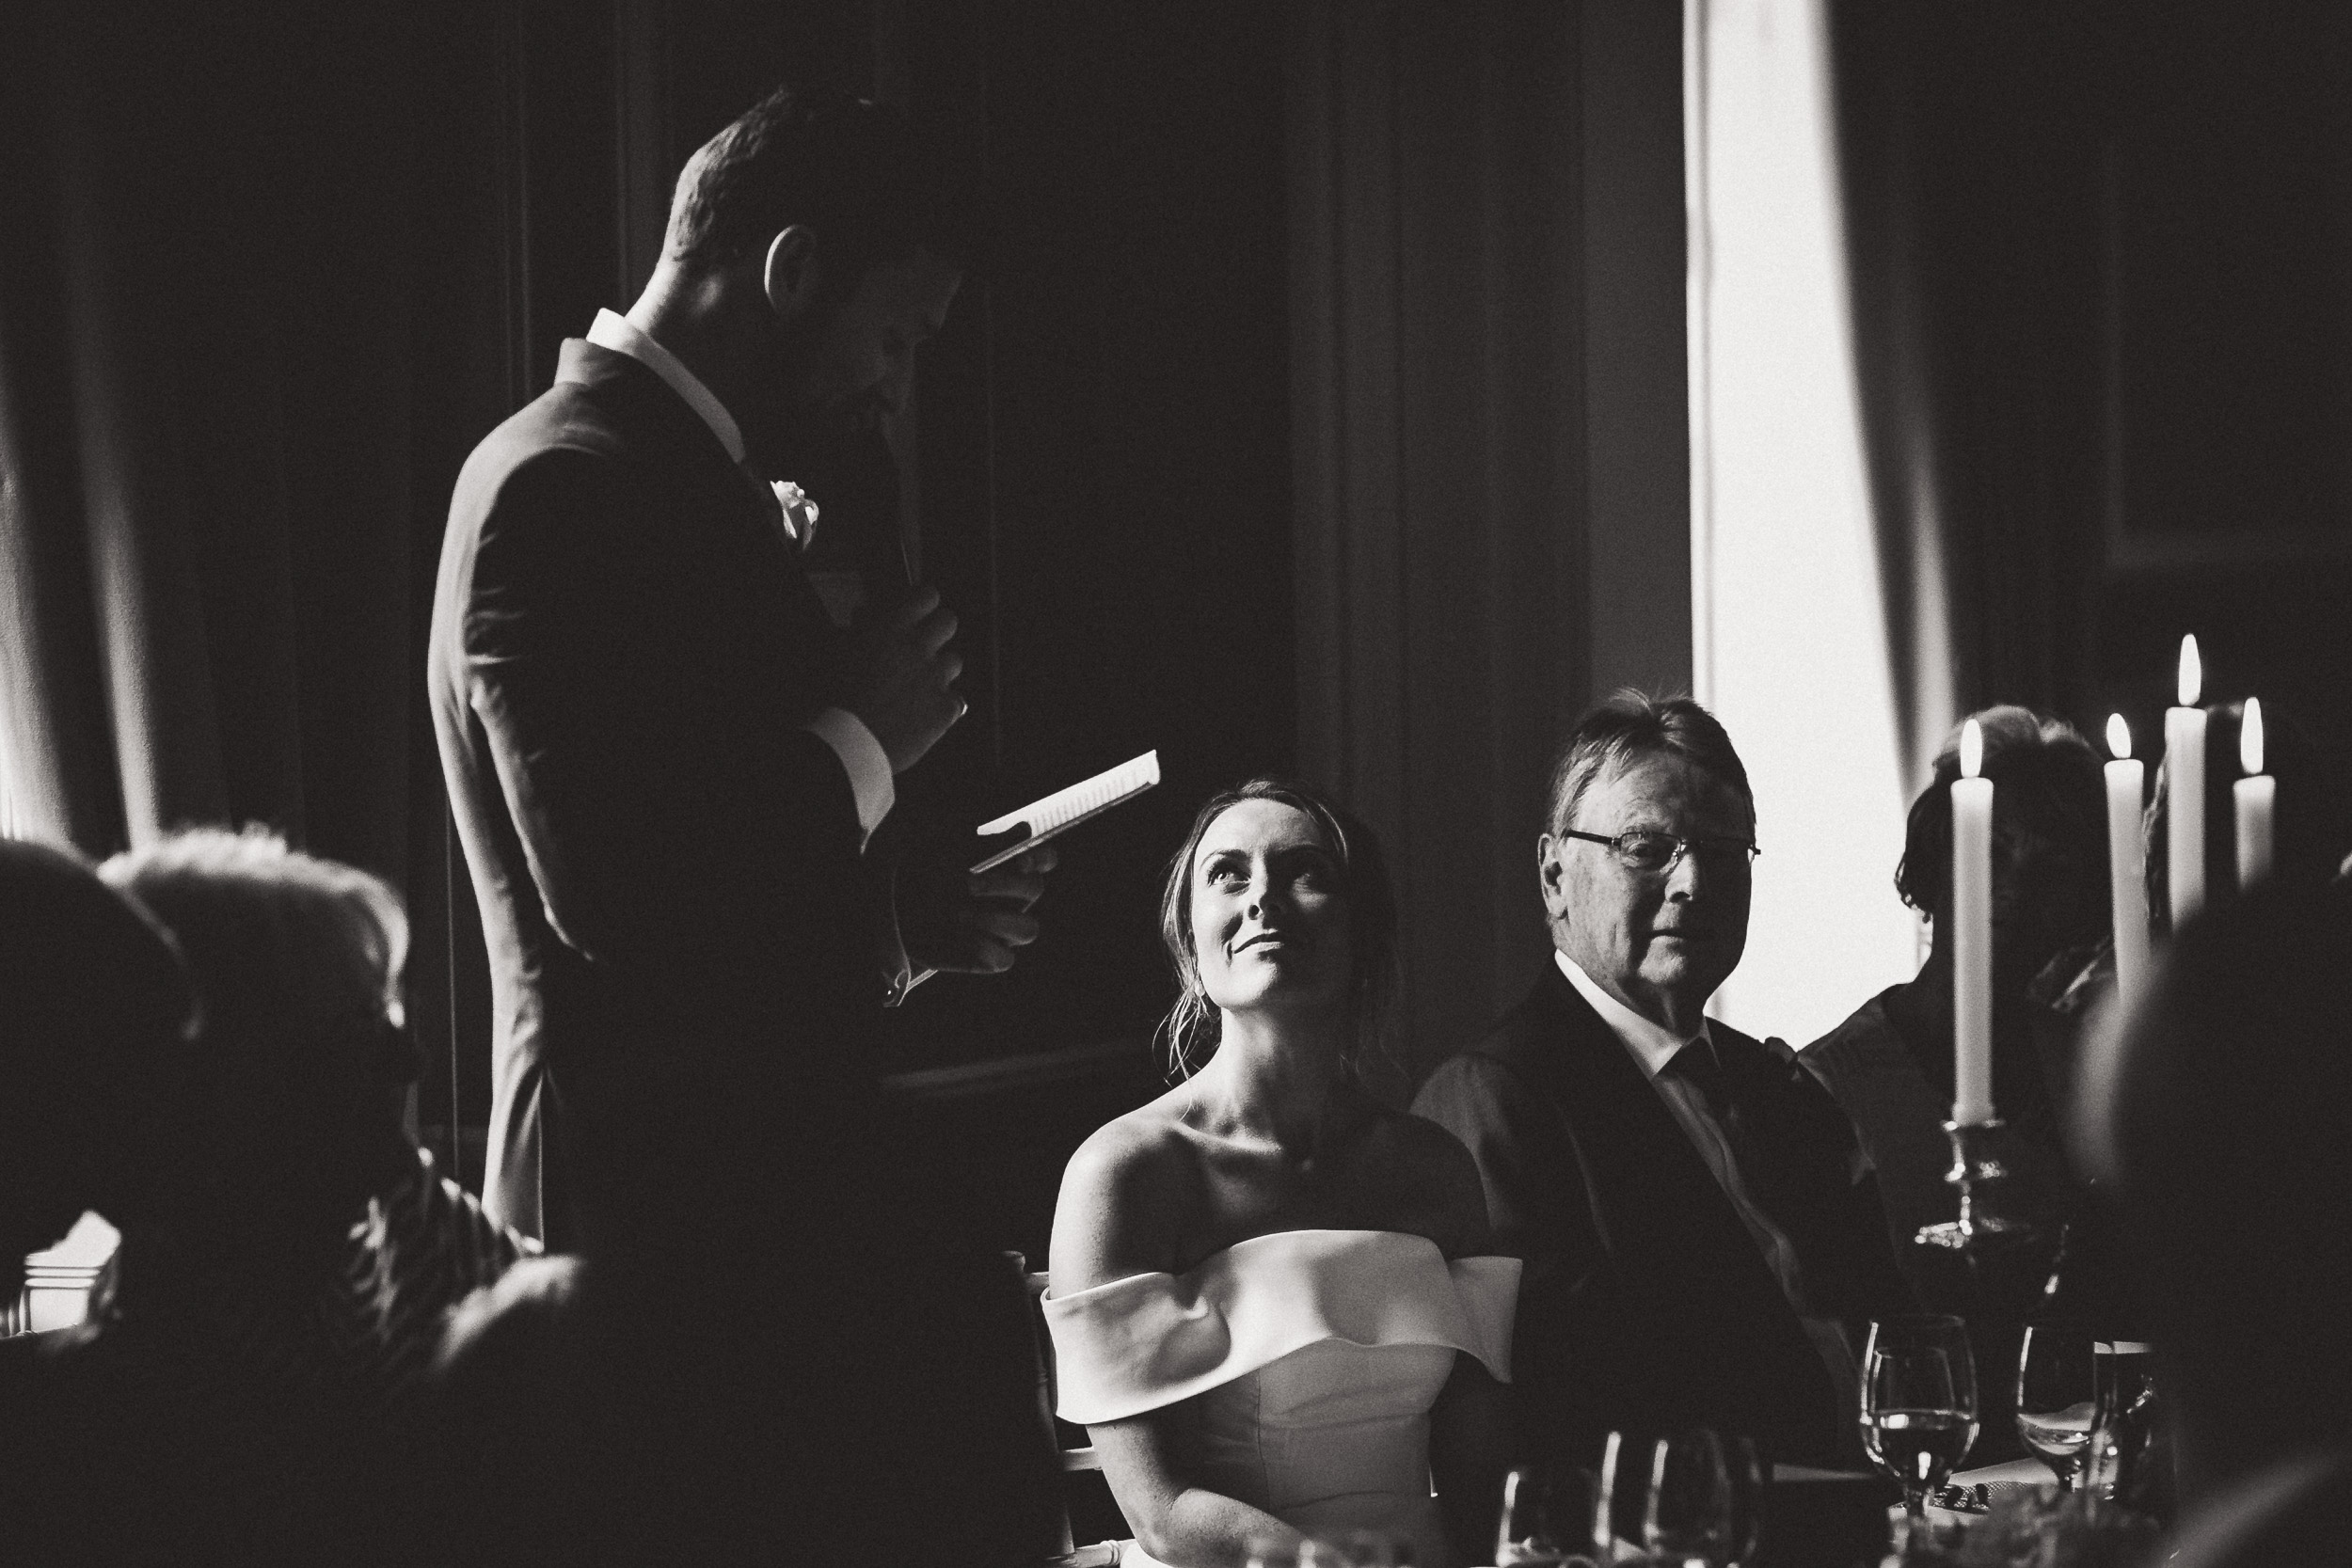 A wedding photographer captures a black and white wedding photo of a man giving a speech.